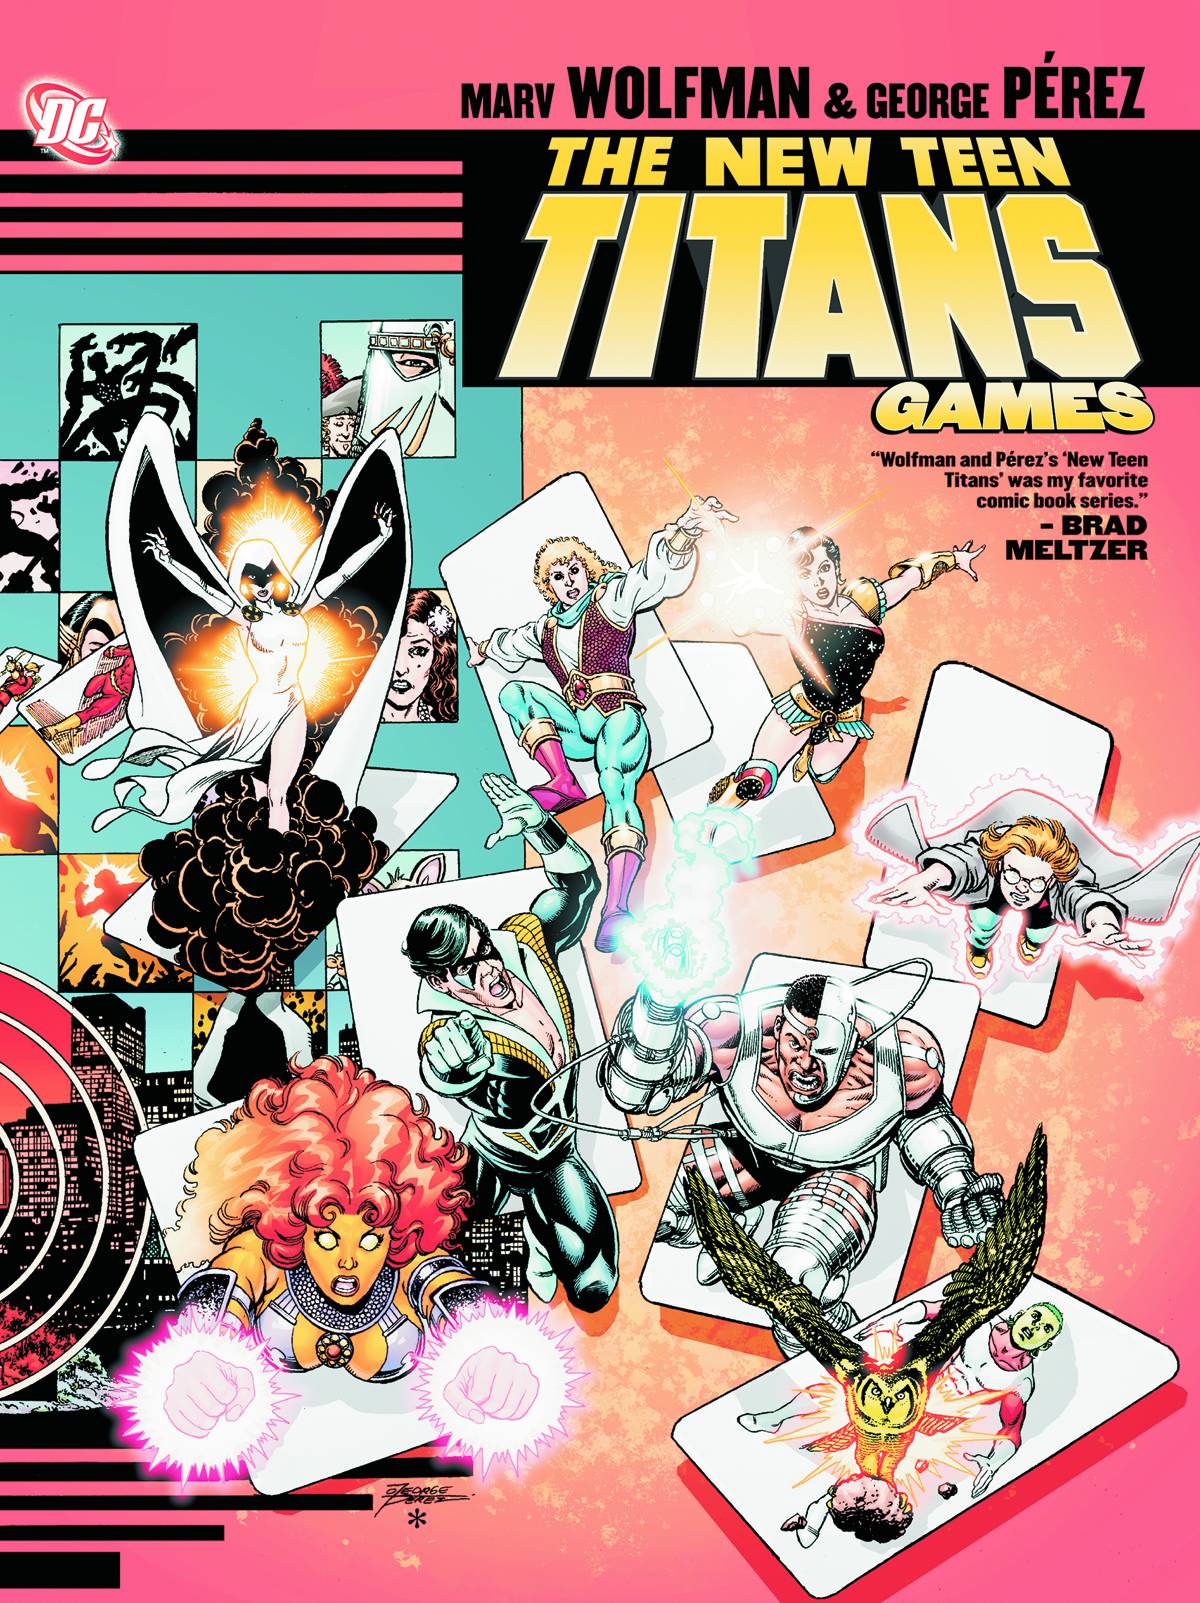 New Teen Titans Games Graphic Novel